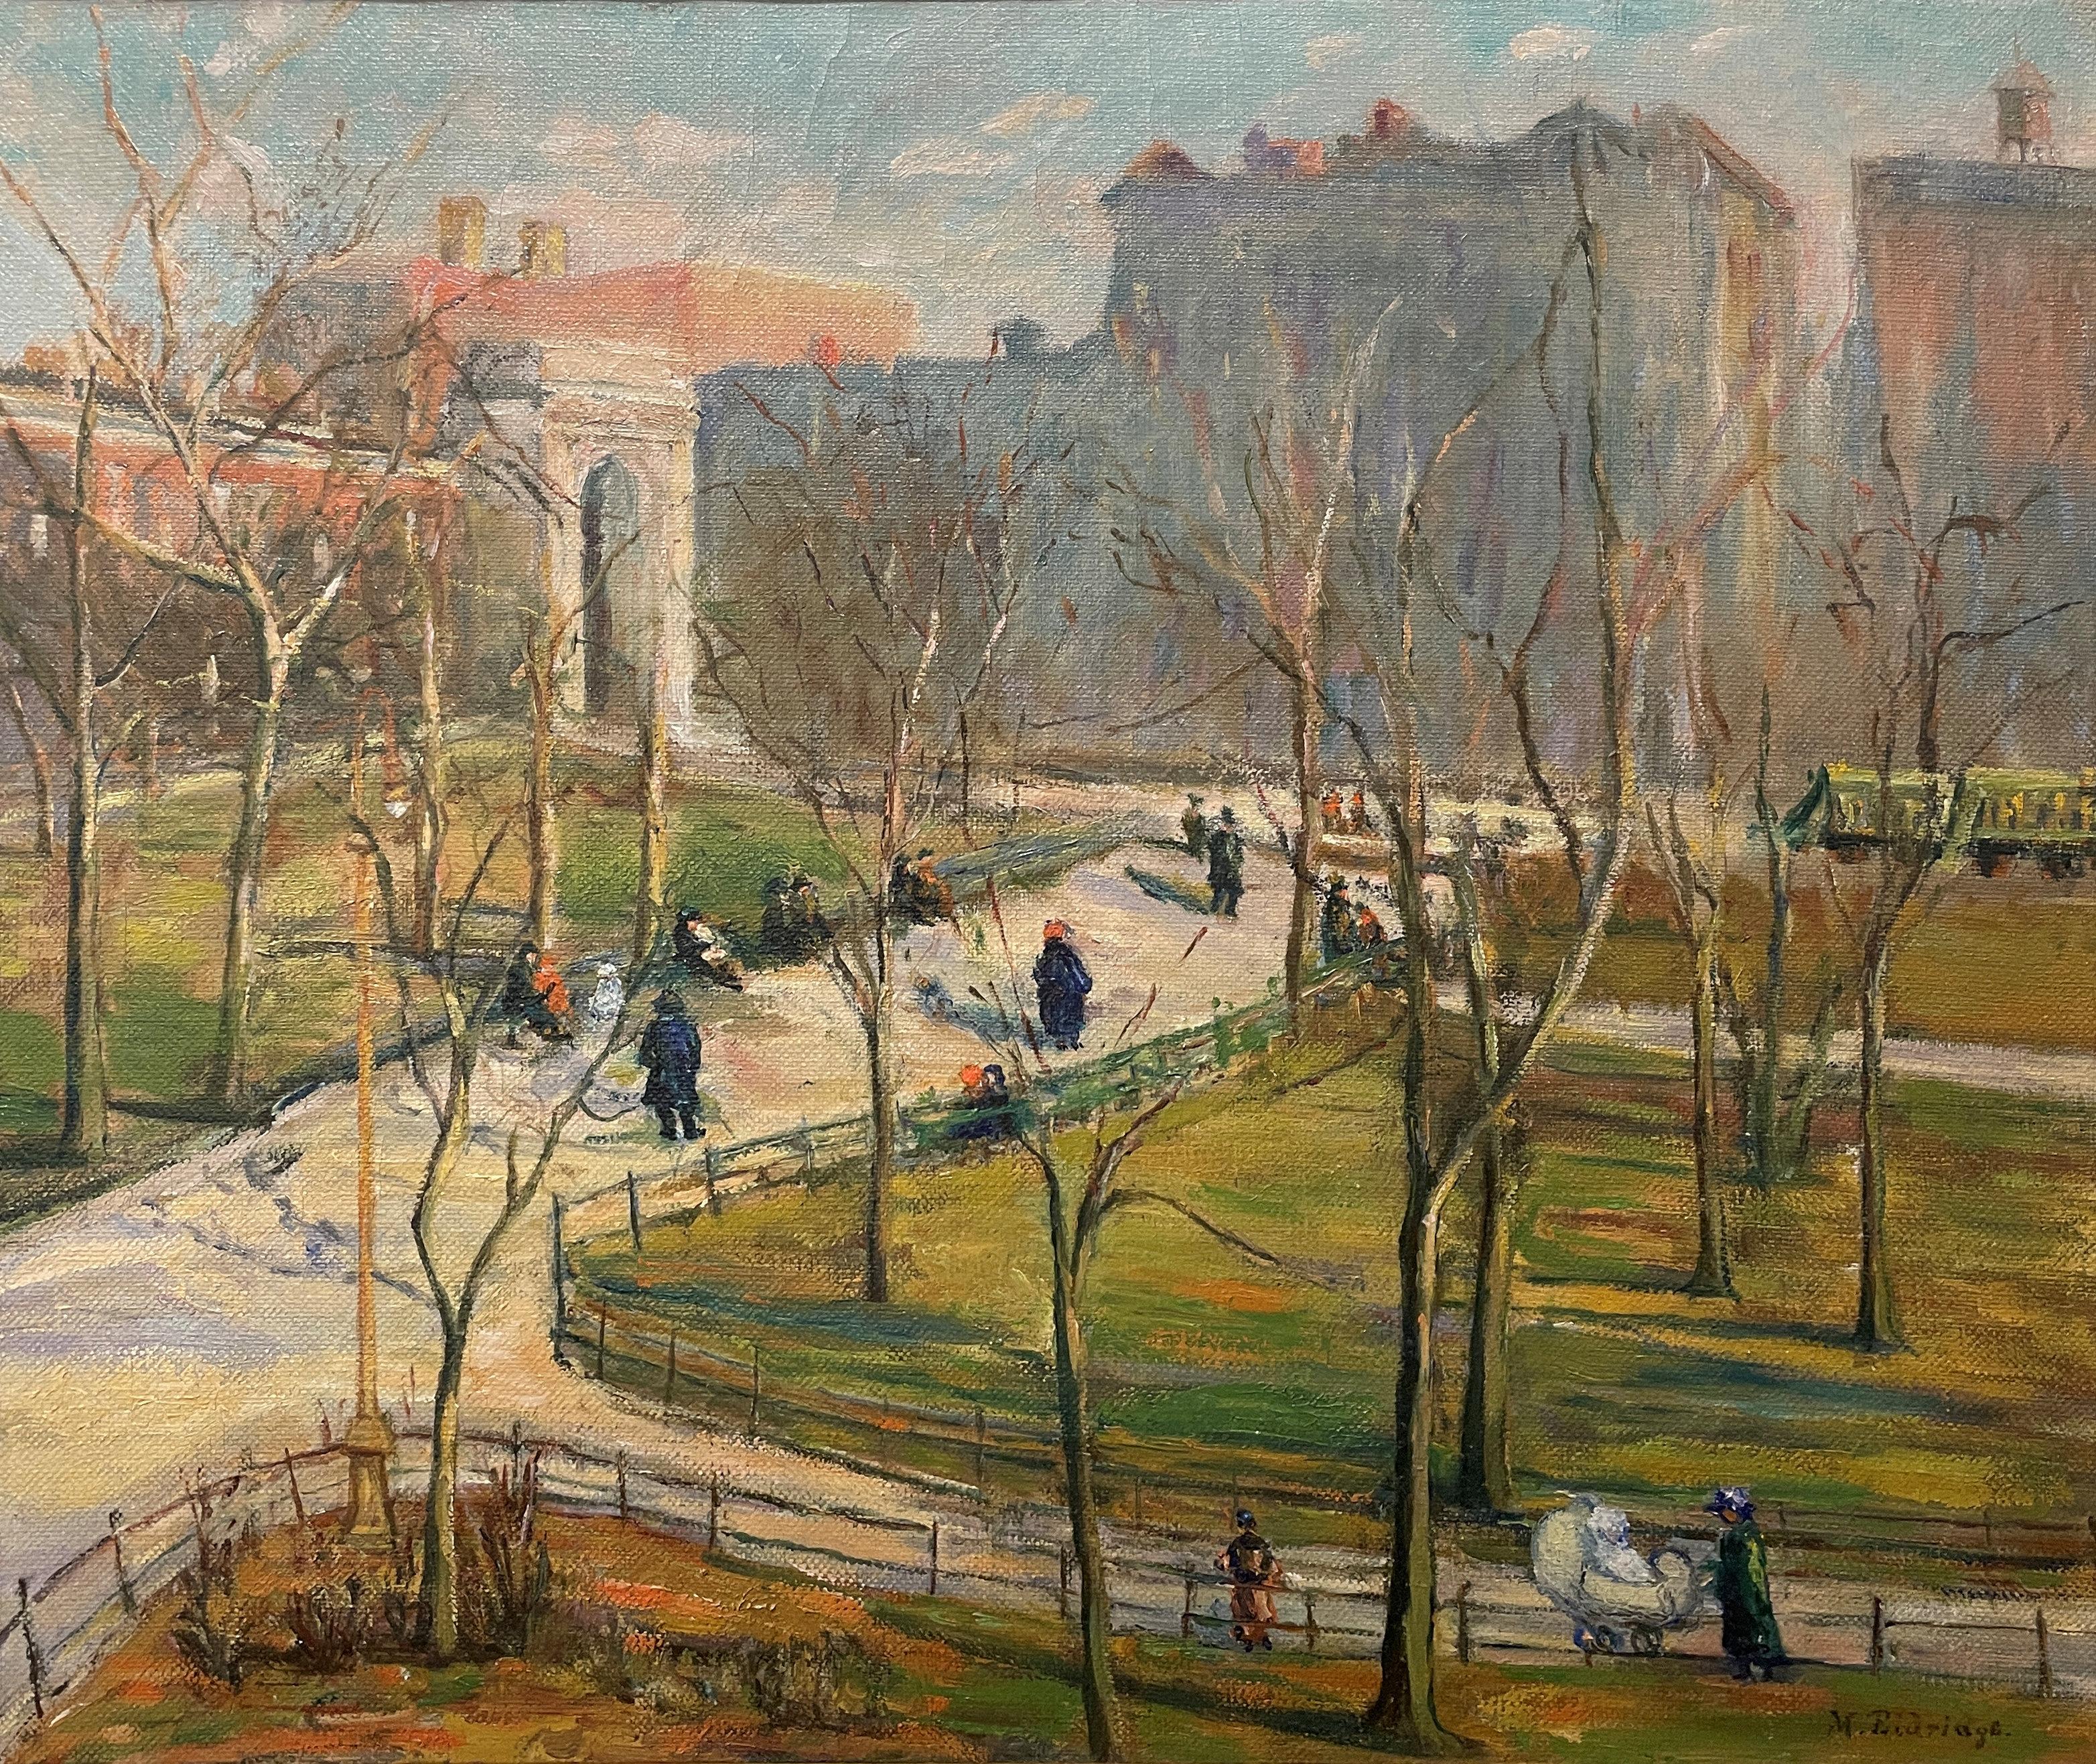 Marion Eldridge
Washington Square Park, circa 1925-30
Signed lower right
Oil on canvas
18 x 22 inches